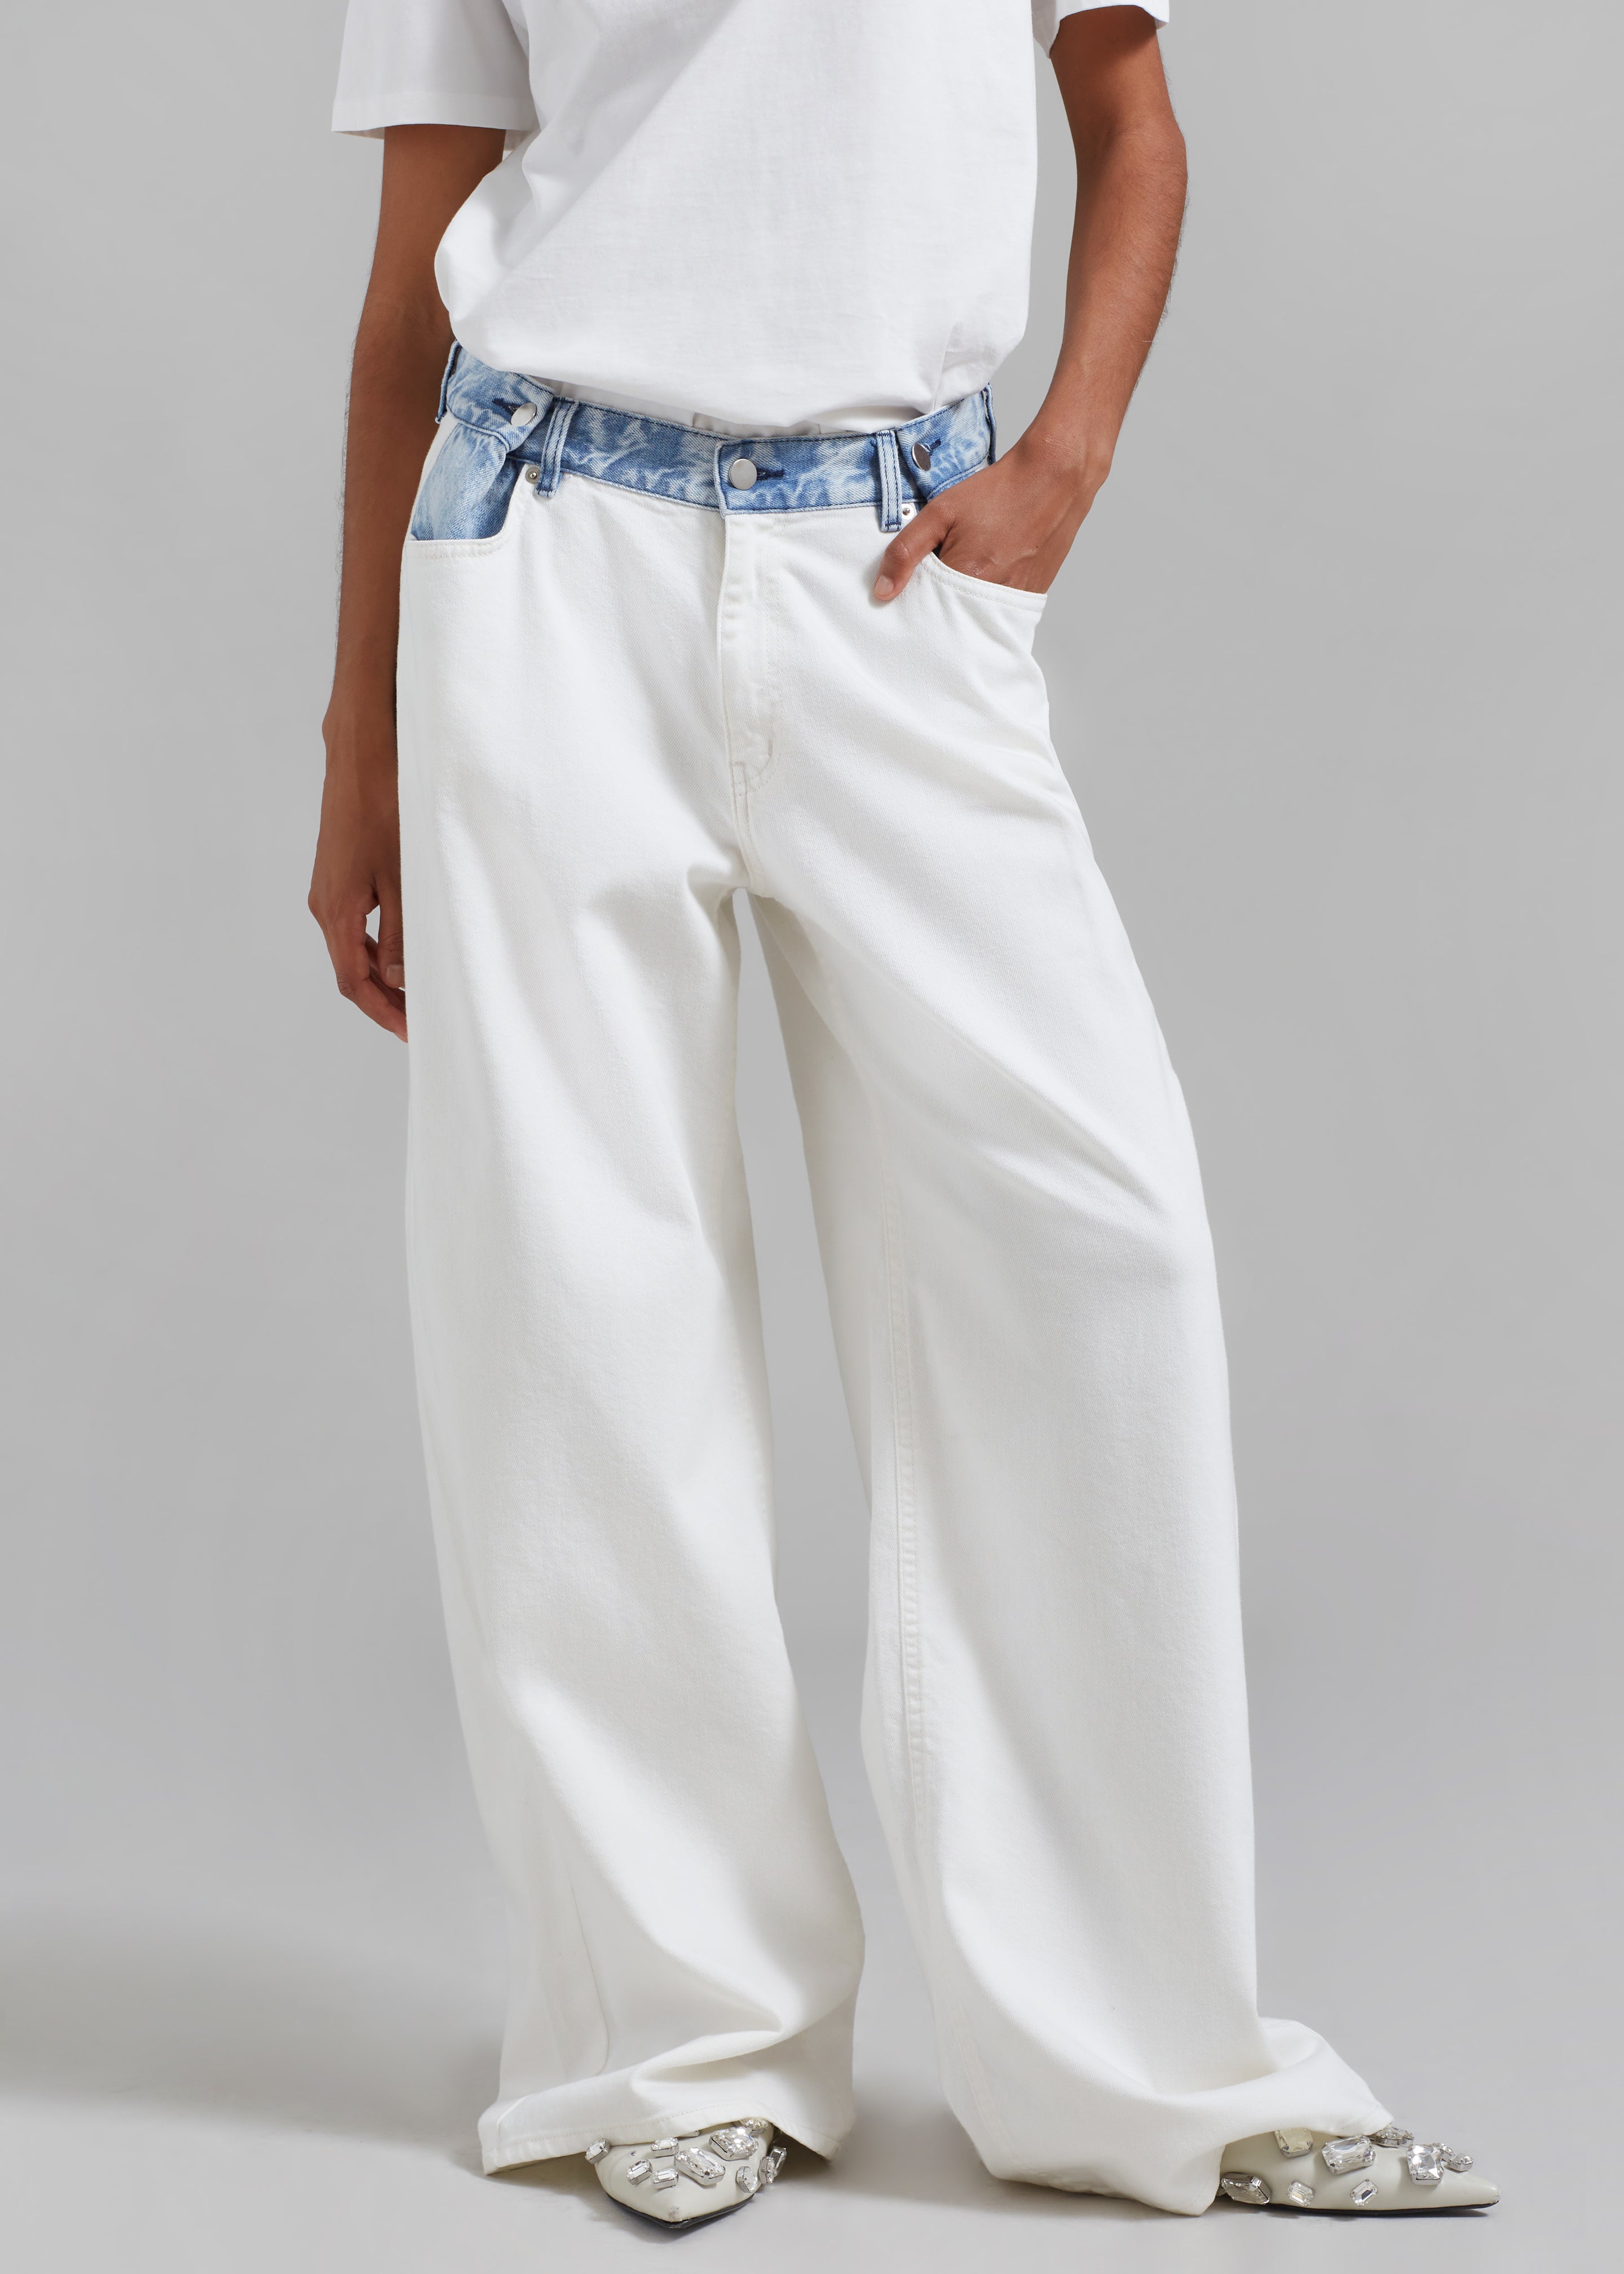 Hayla Contrast Denim Pants - Off White/Blue – The Frankie Shop